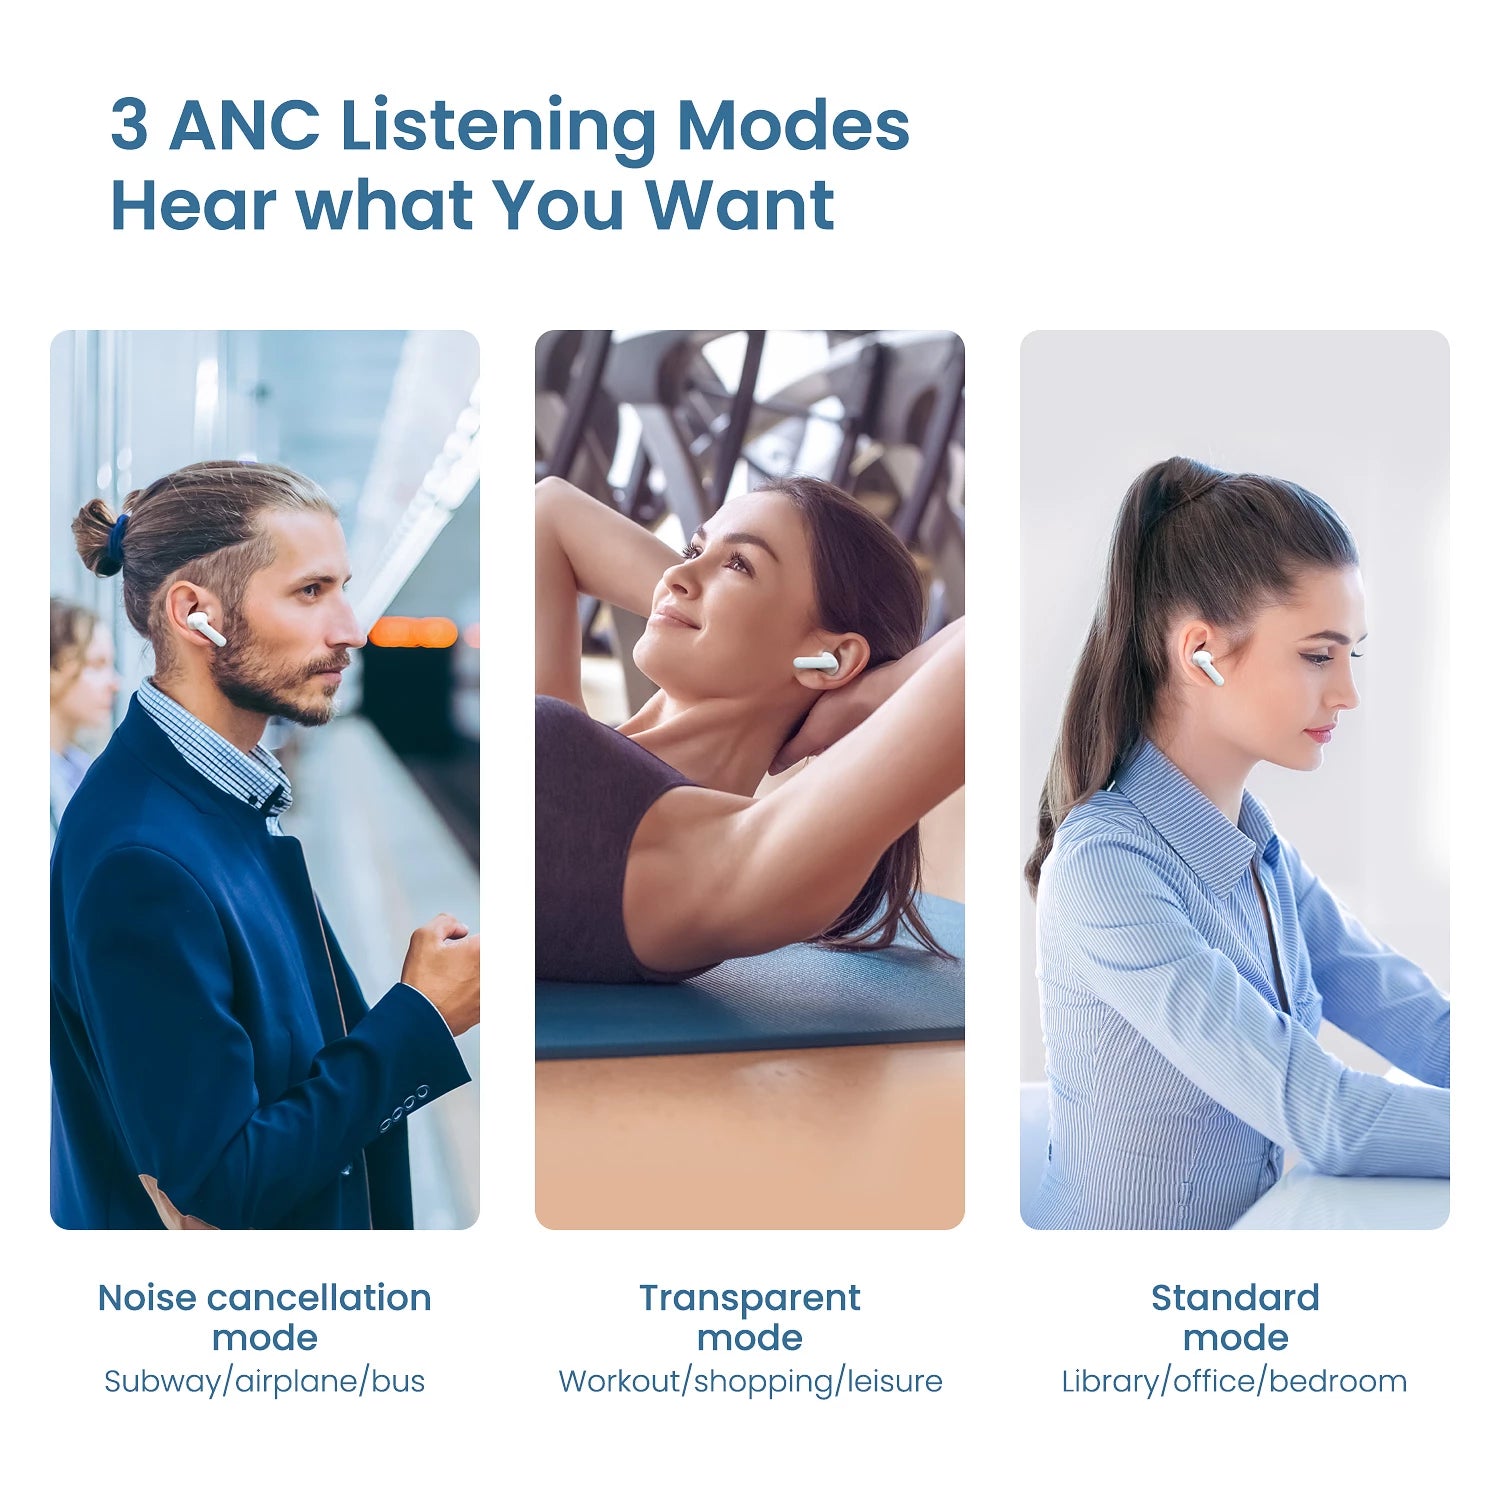 HAYLOU MoriPods ANC Bluetooth Earphones